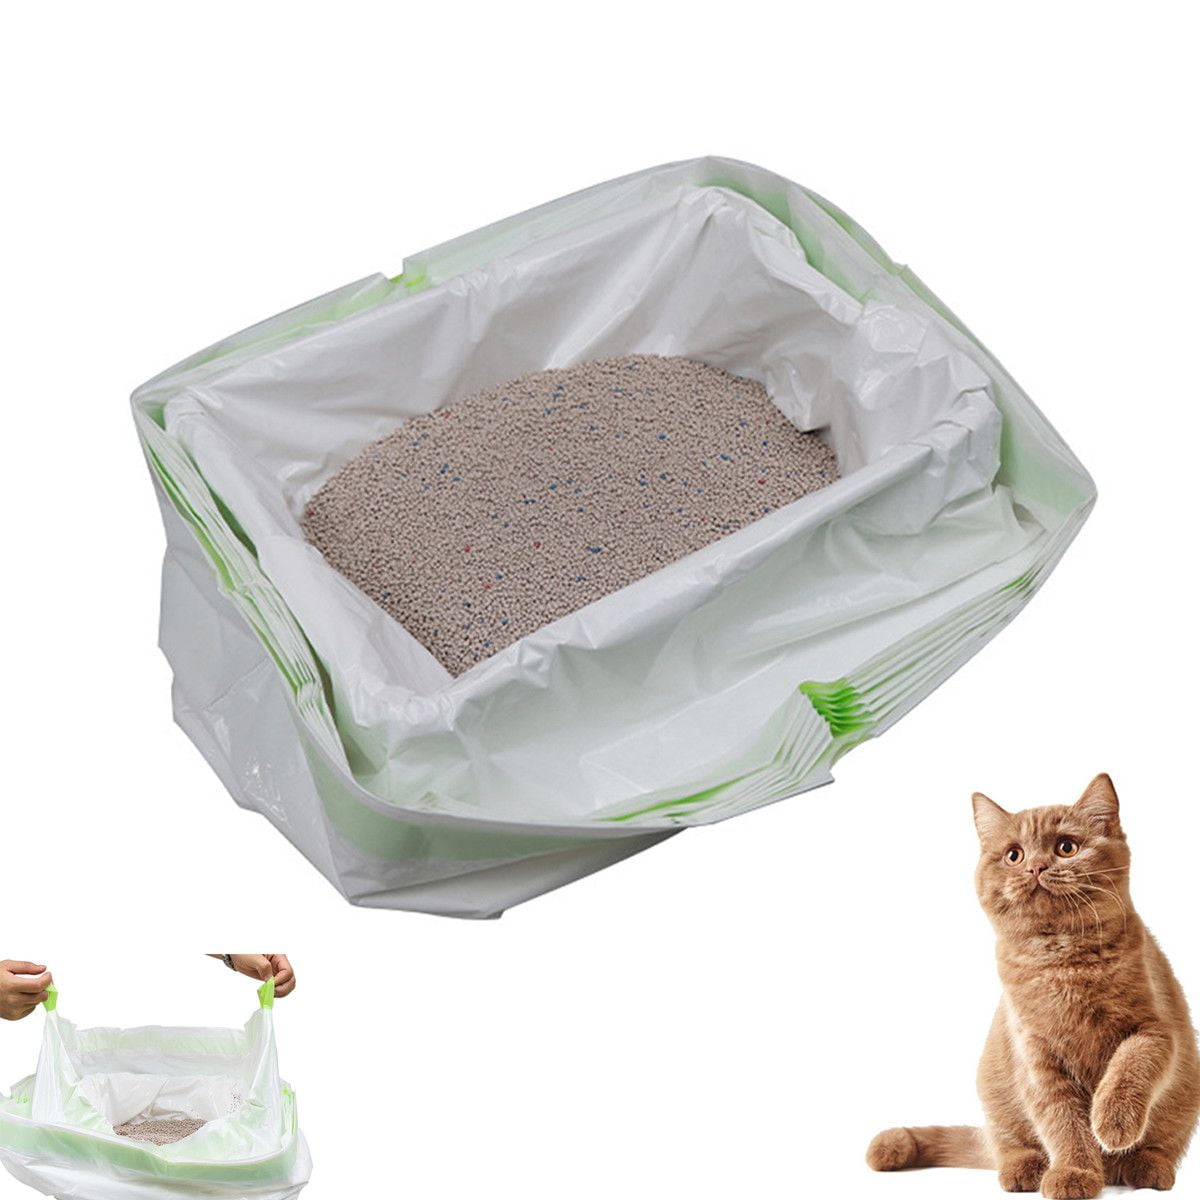 How to choose the appropriate litter box mat. - Modkat